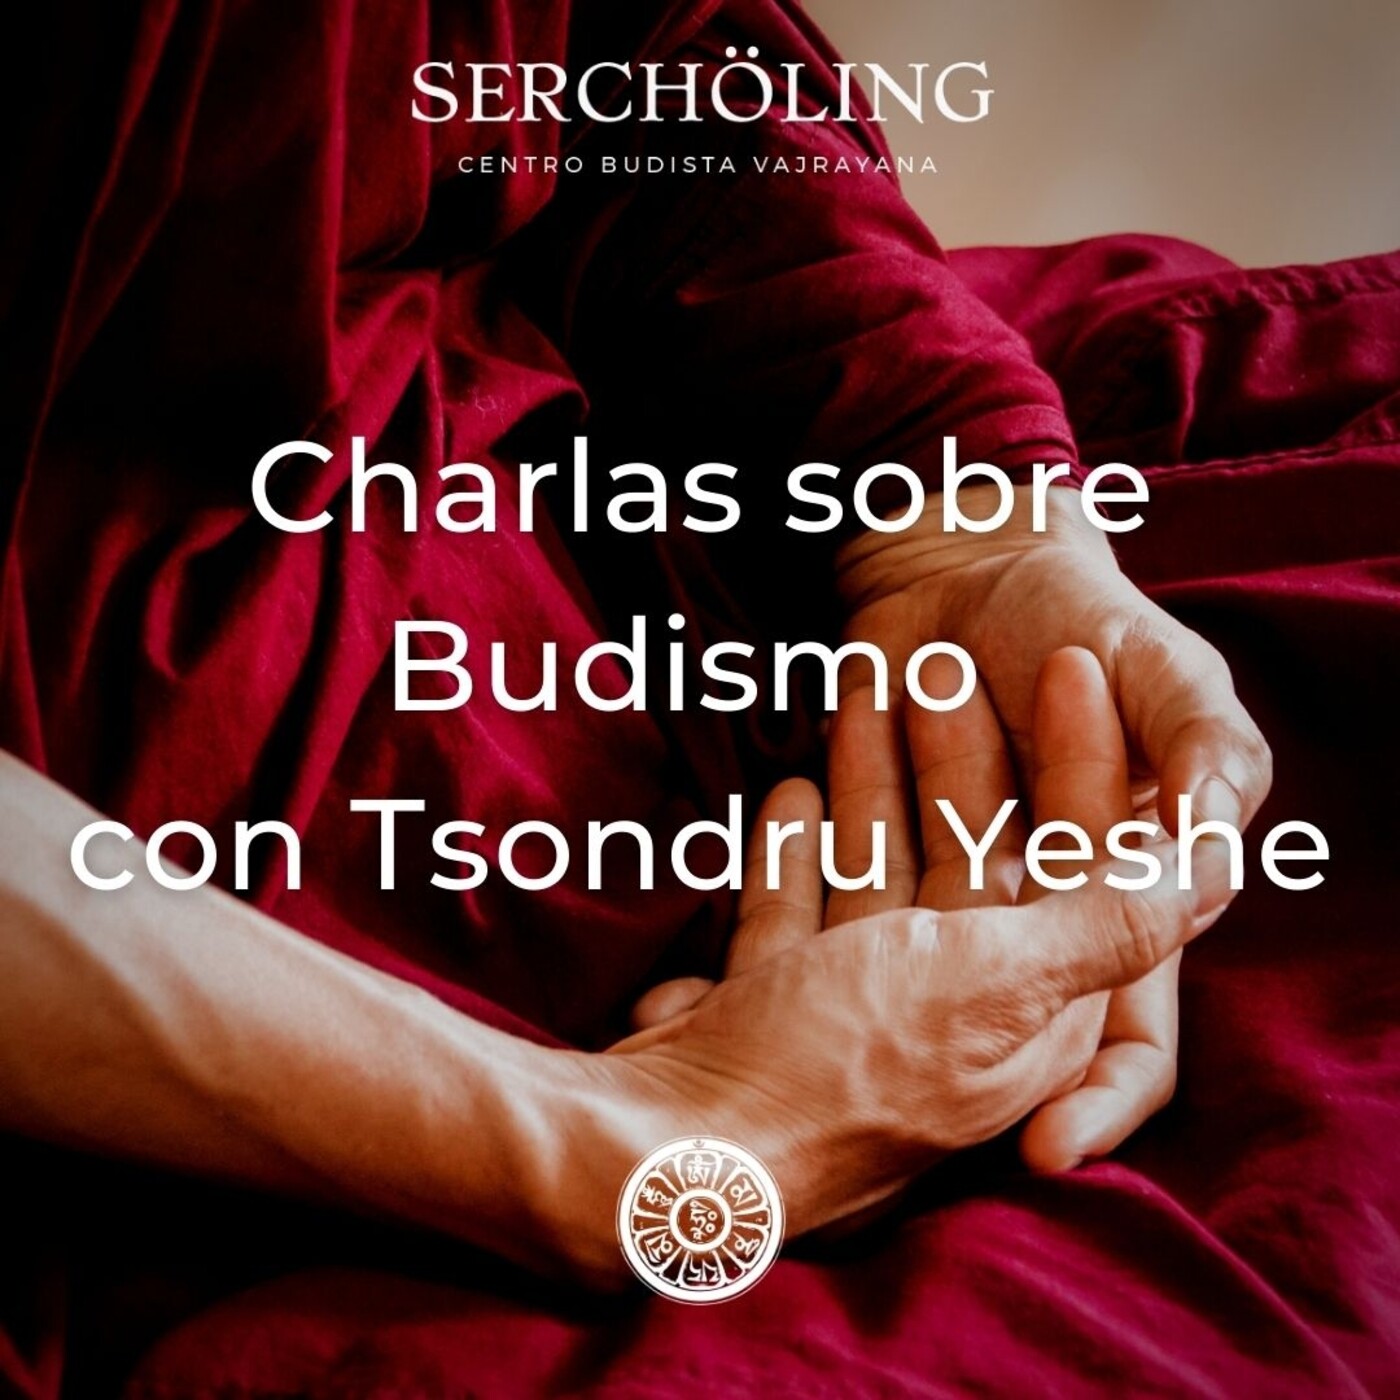 Charlas sobre Budismo con Tsondru Yeshe